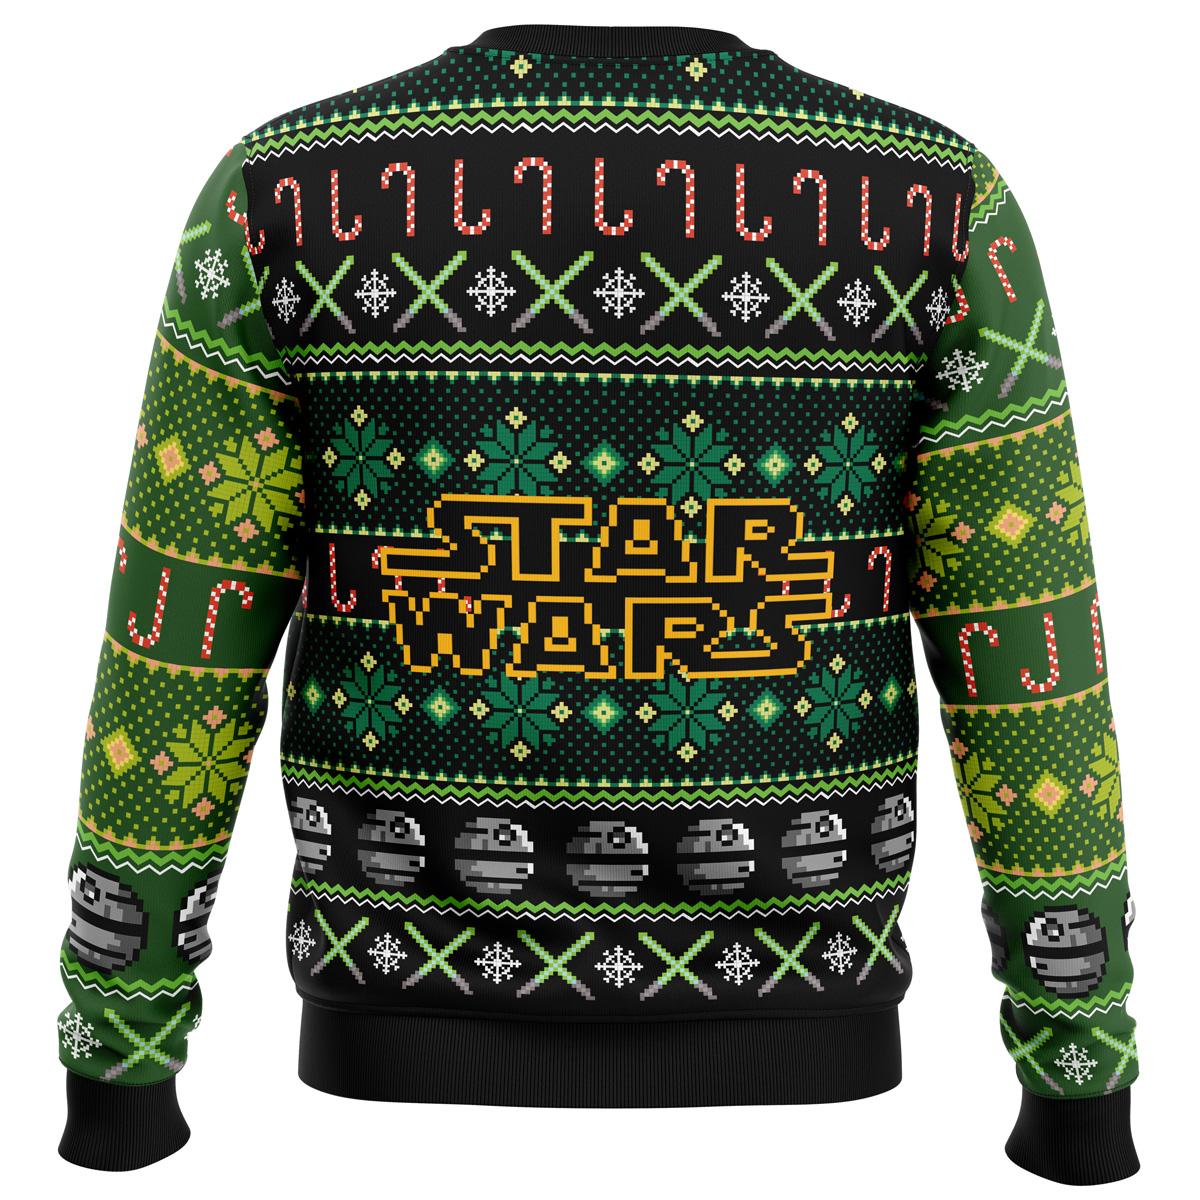 Season It Is Jolly To Be Yoda Ugly Sweater